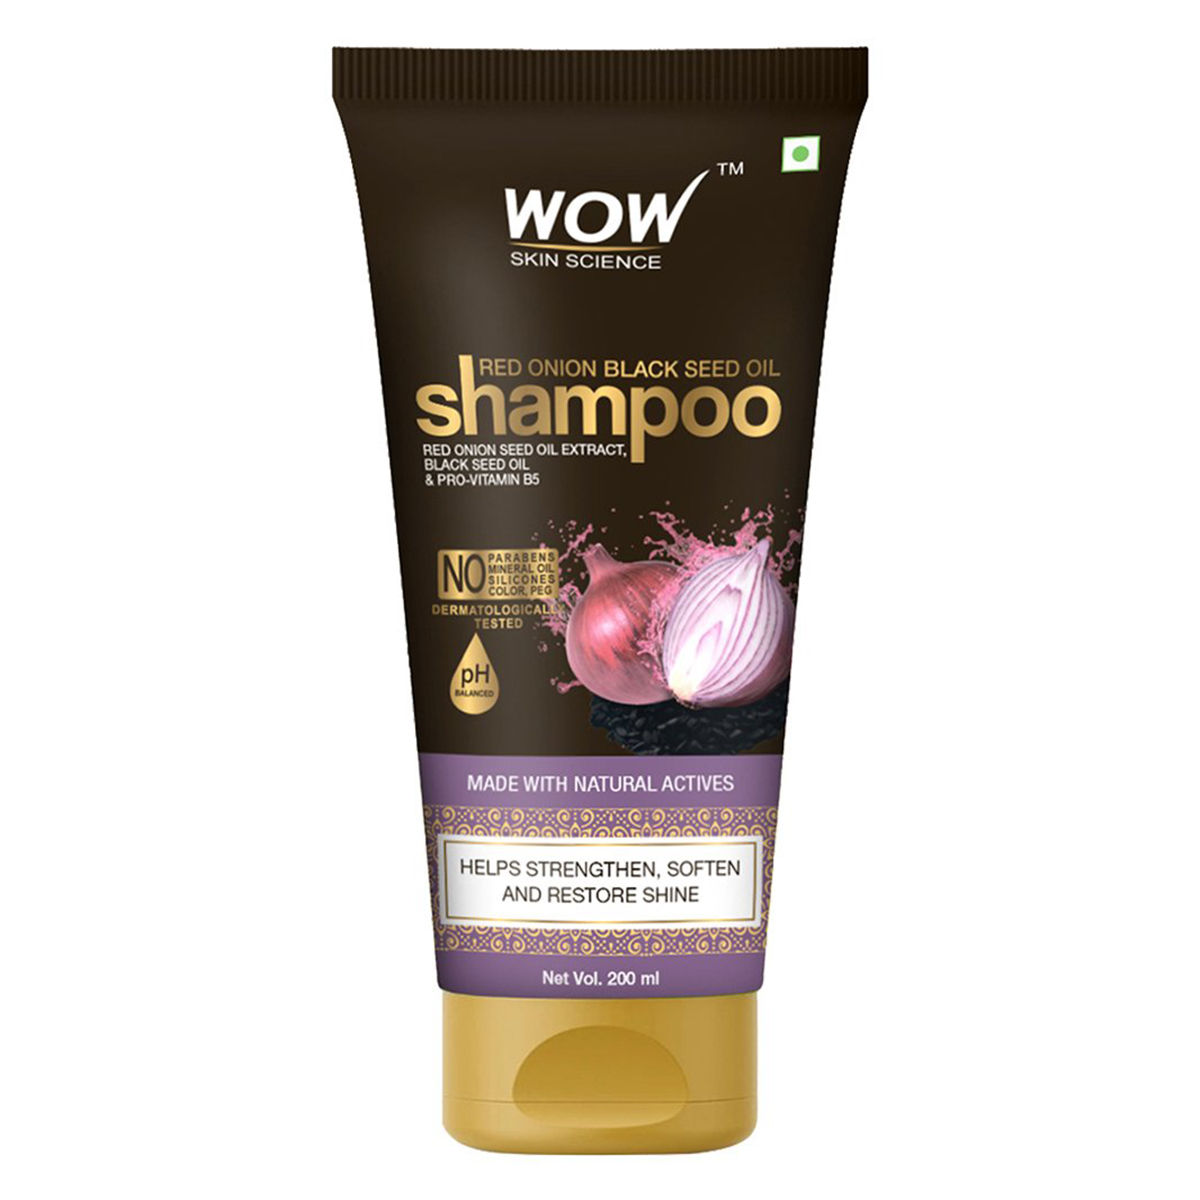 Buy Wow Skin Science Red Onion Black Seed Oil Shampoo, 200 ml Online